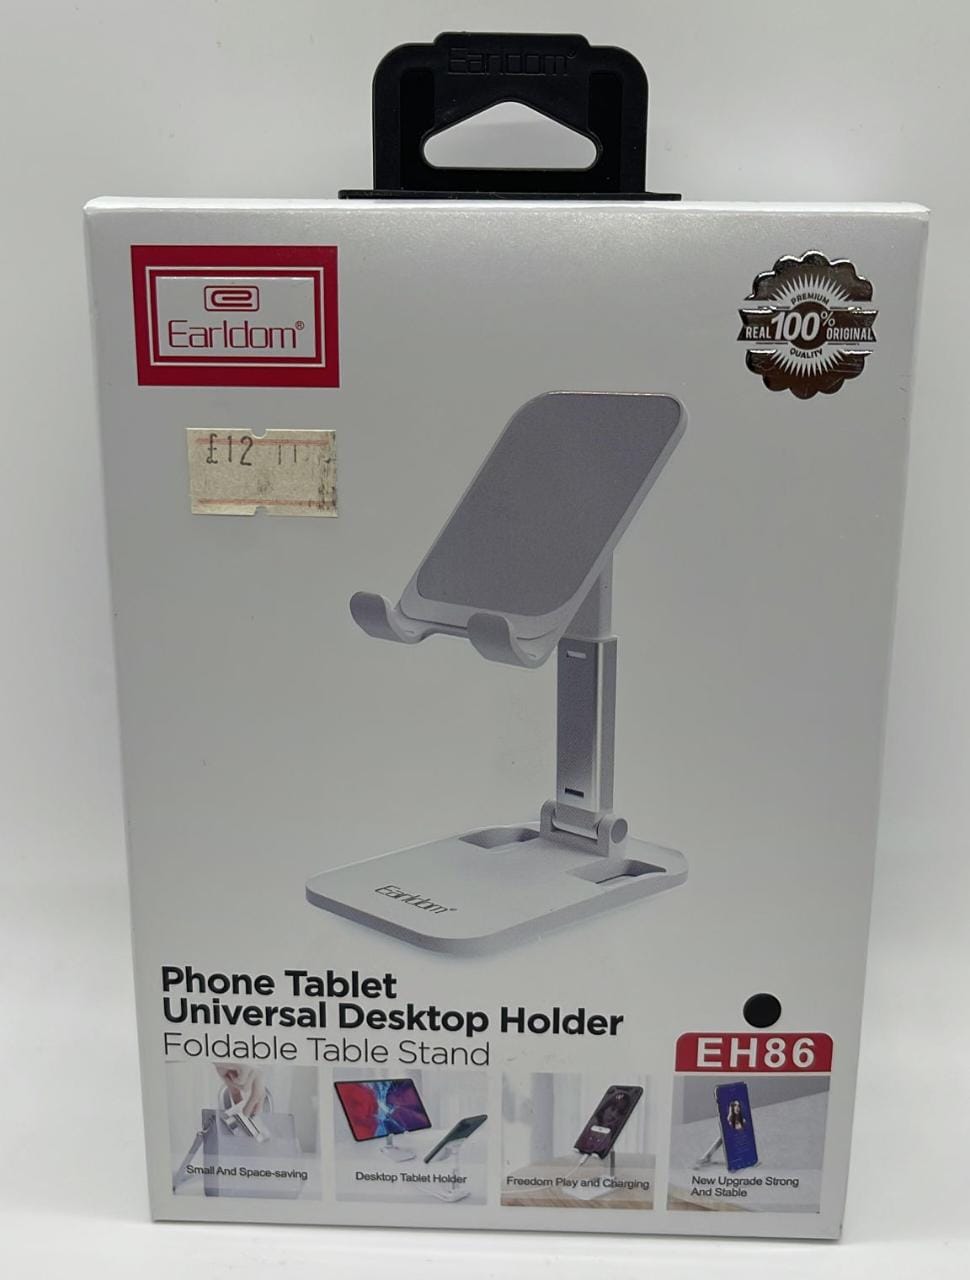 Phone Tablet Universal Desktop Holder